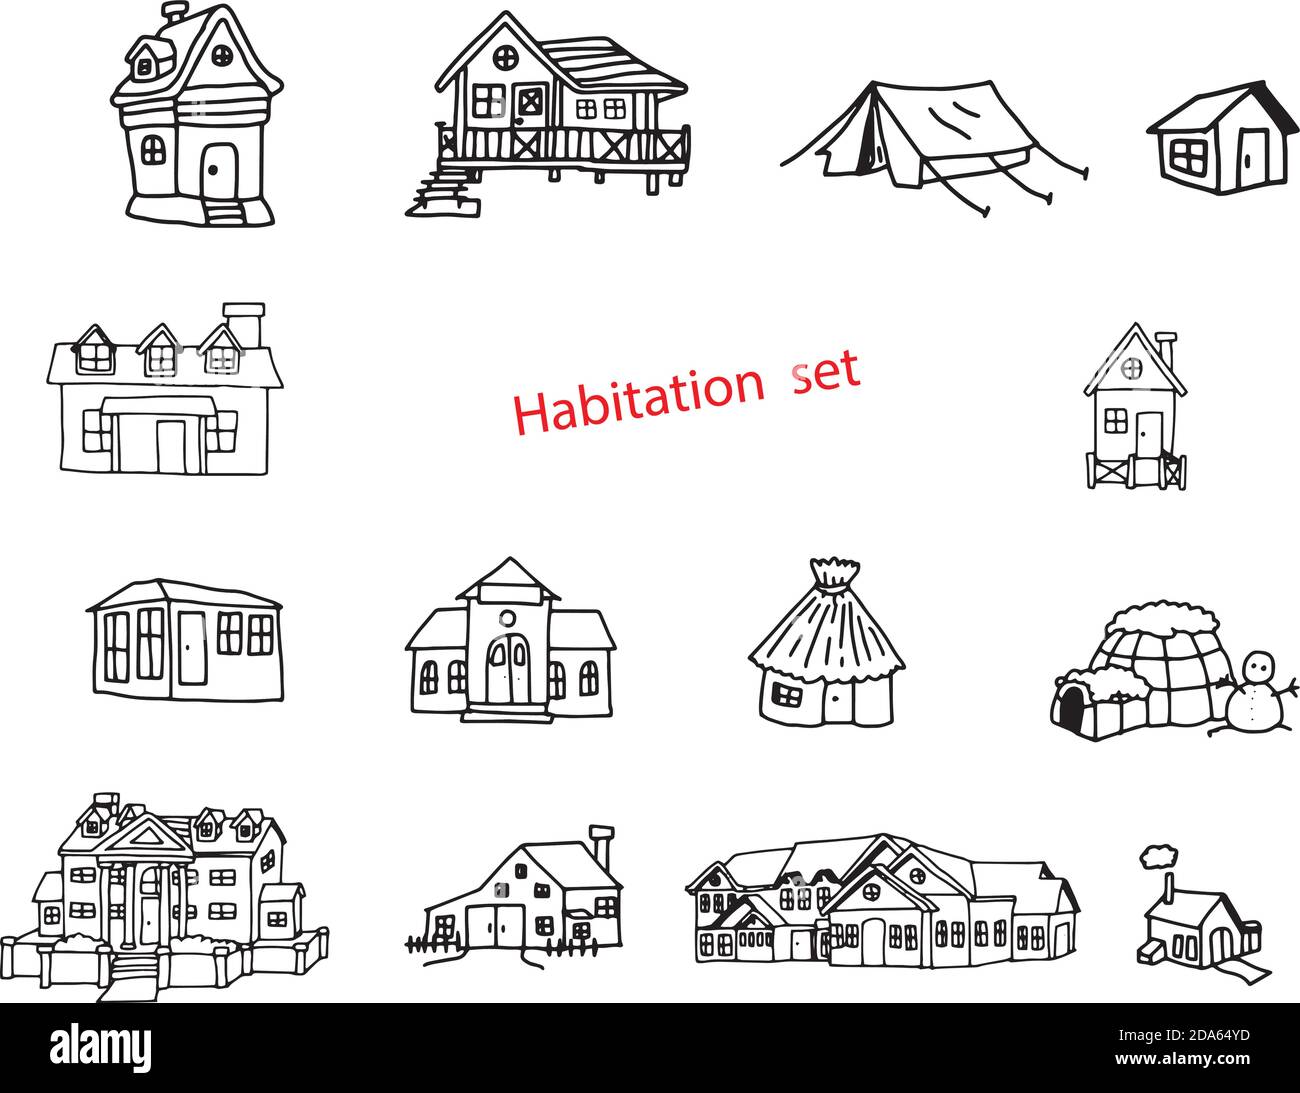 illustration vector doodles hand drawn of habitation or resident. Stock Vector